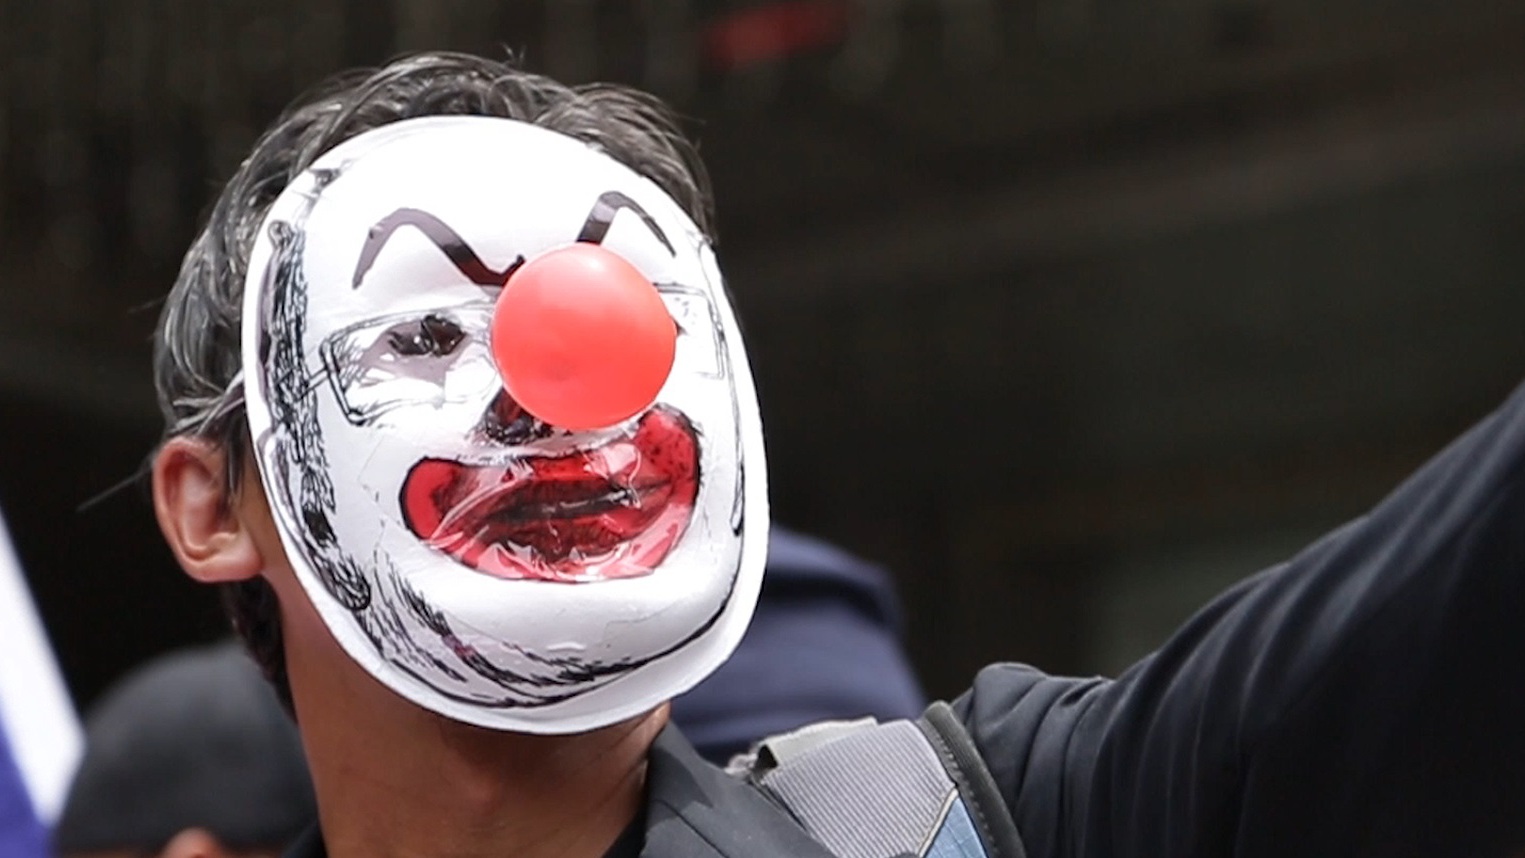 Kelptocrats_DogWoof_02.39_Clown Faced Protester_903977.jpg